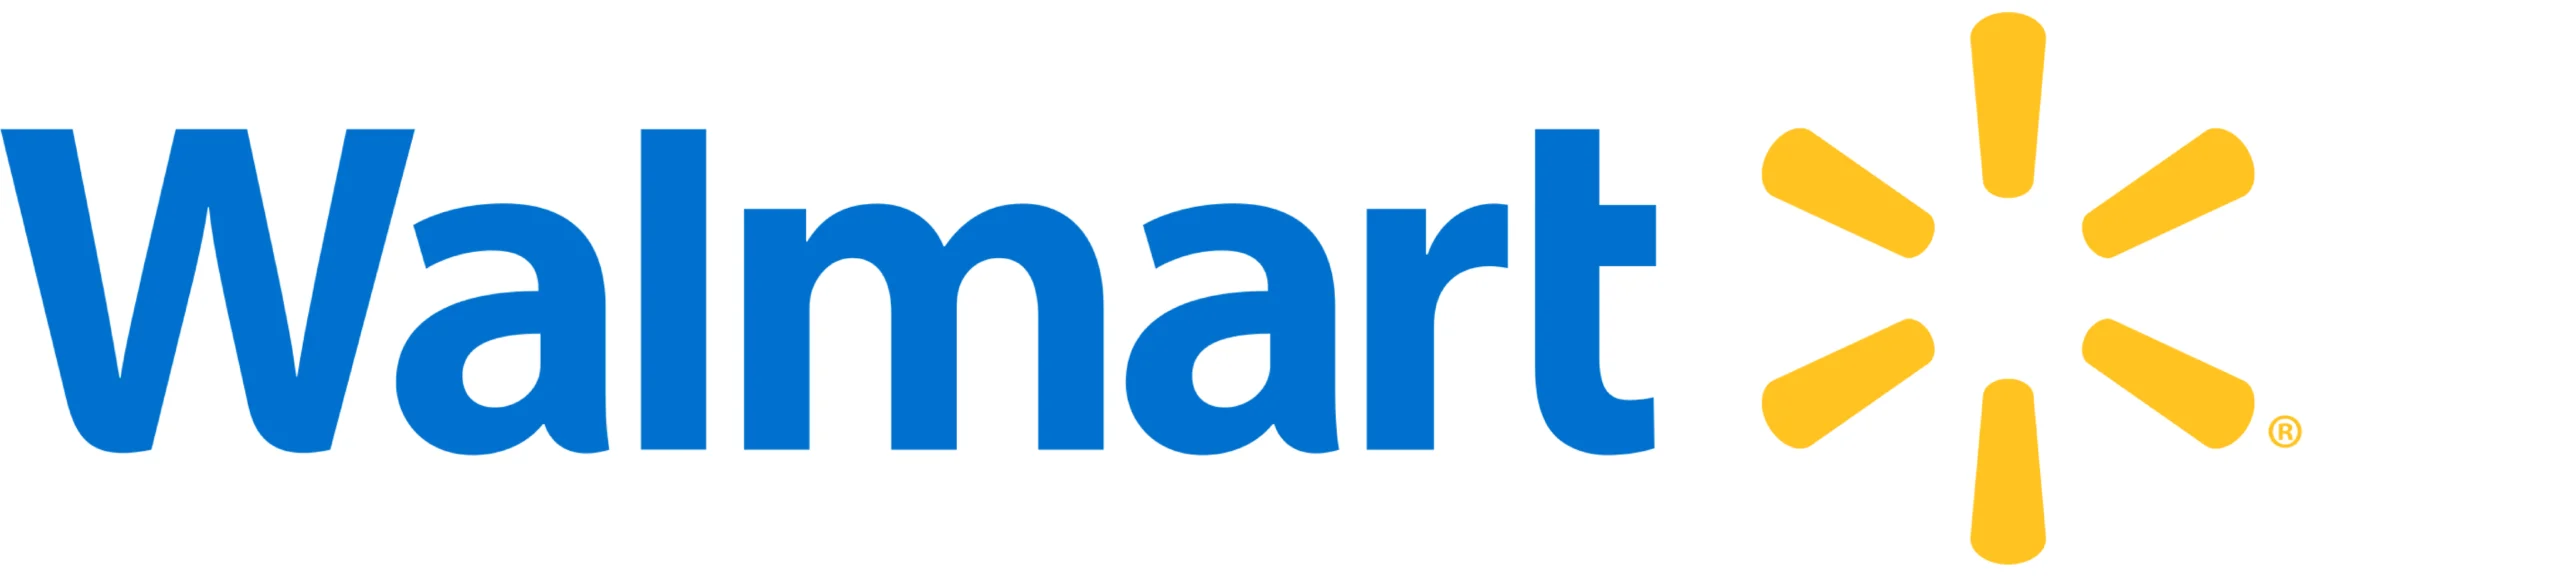 Image of Walmart logo